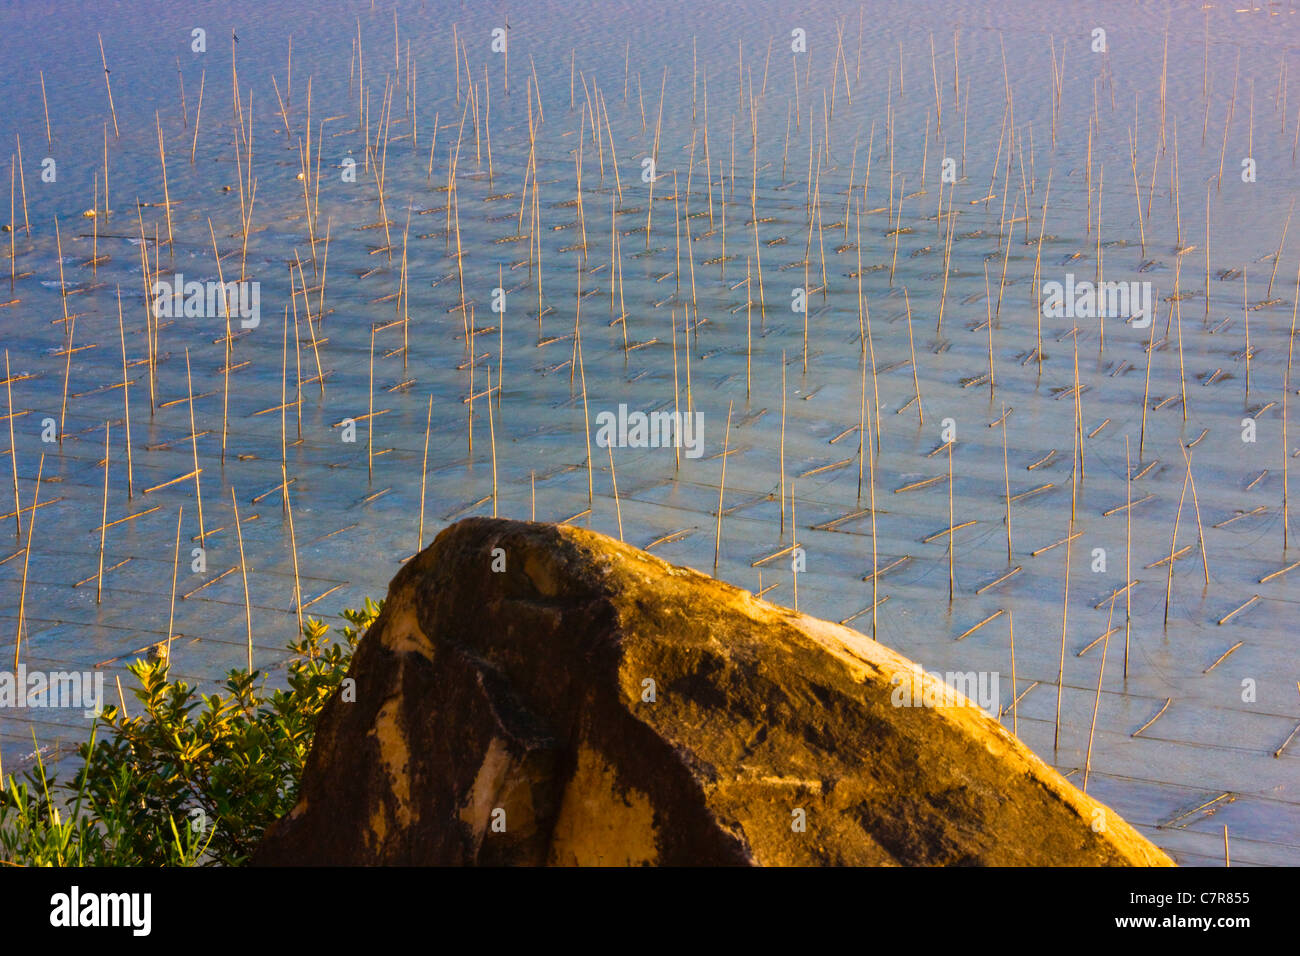 Canne di bambù per essiccare le alghe, il Mar della Cina orientale, Xiapu, provincia del Fujian, Cina Foto Stock